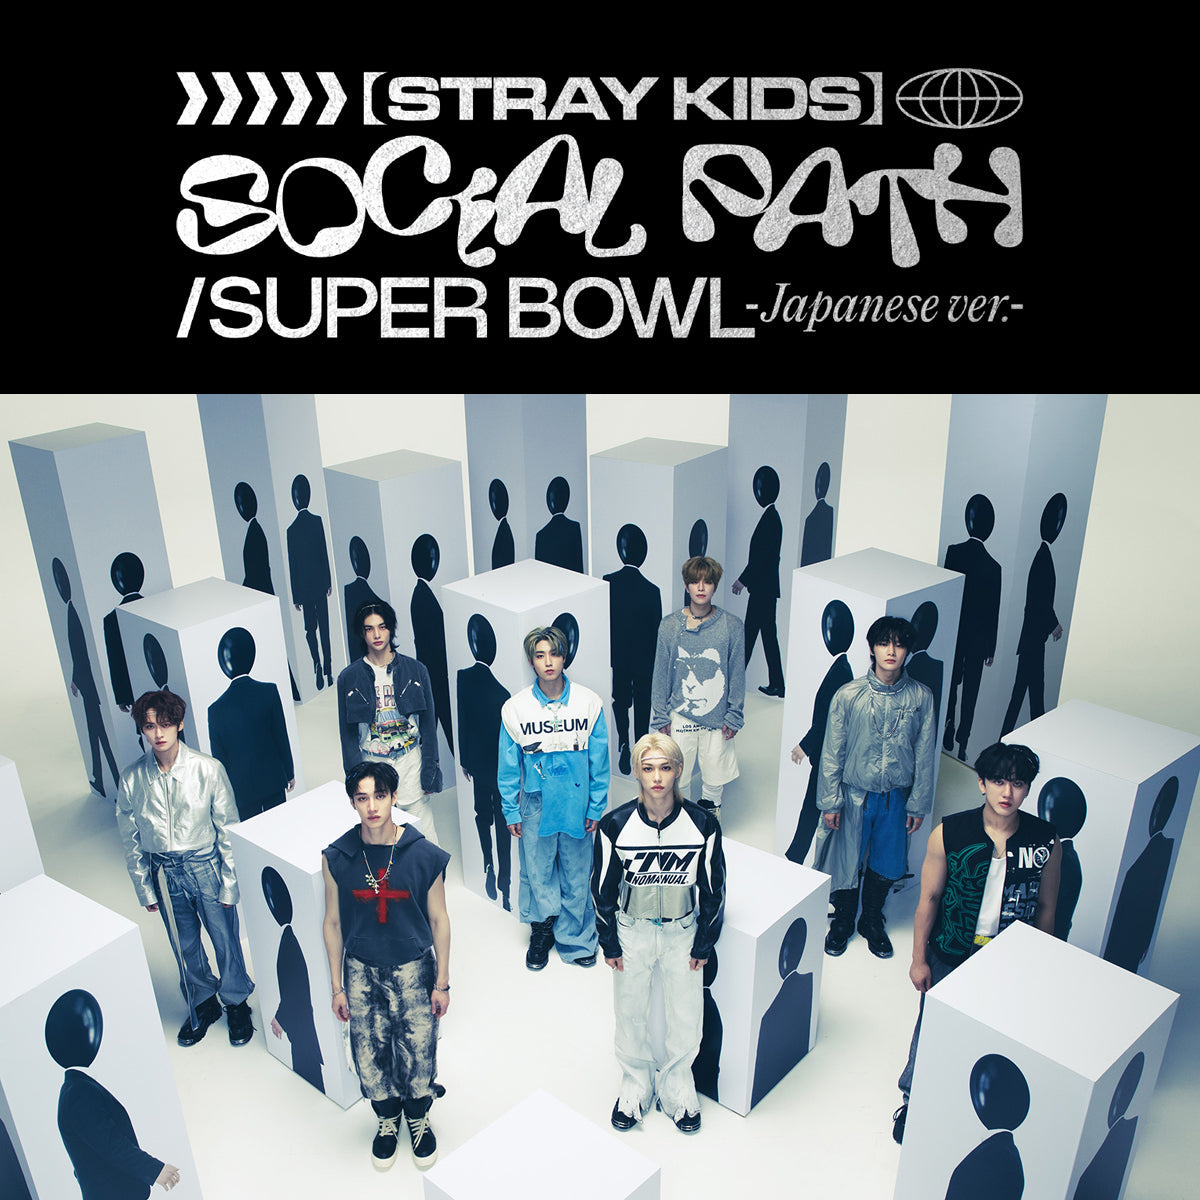 Stray Kids - Social Path (feat. LiSA) / Super Bowl -Japanese ver. Regular Edition